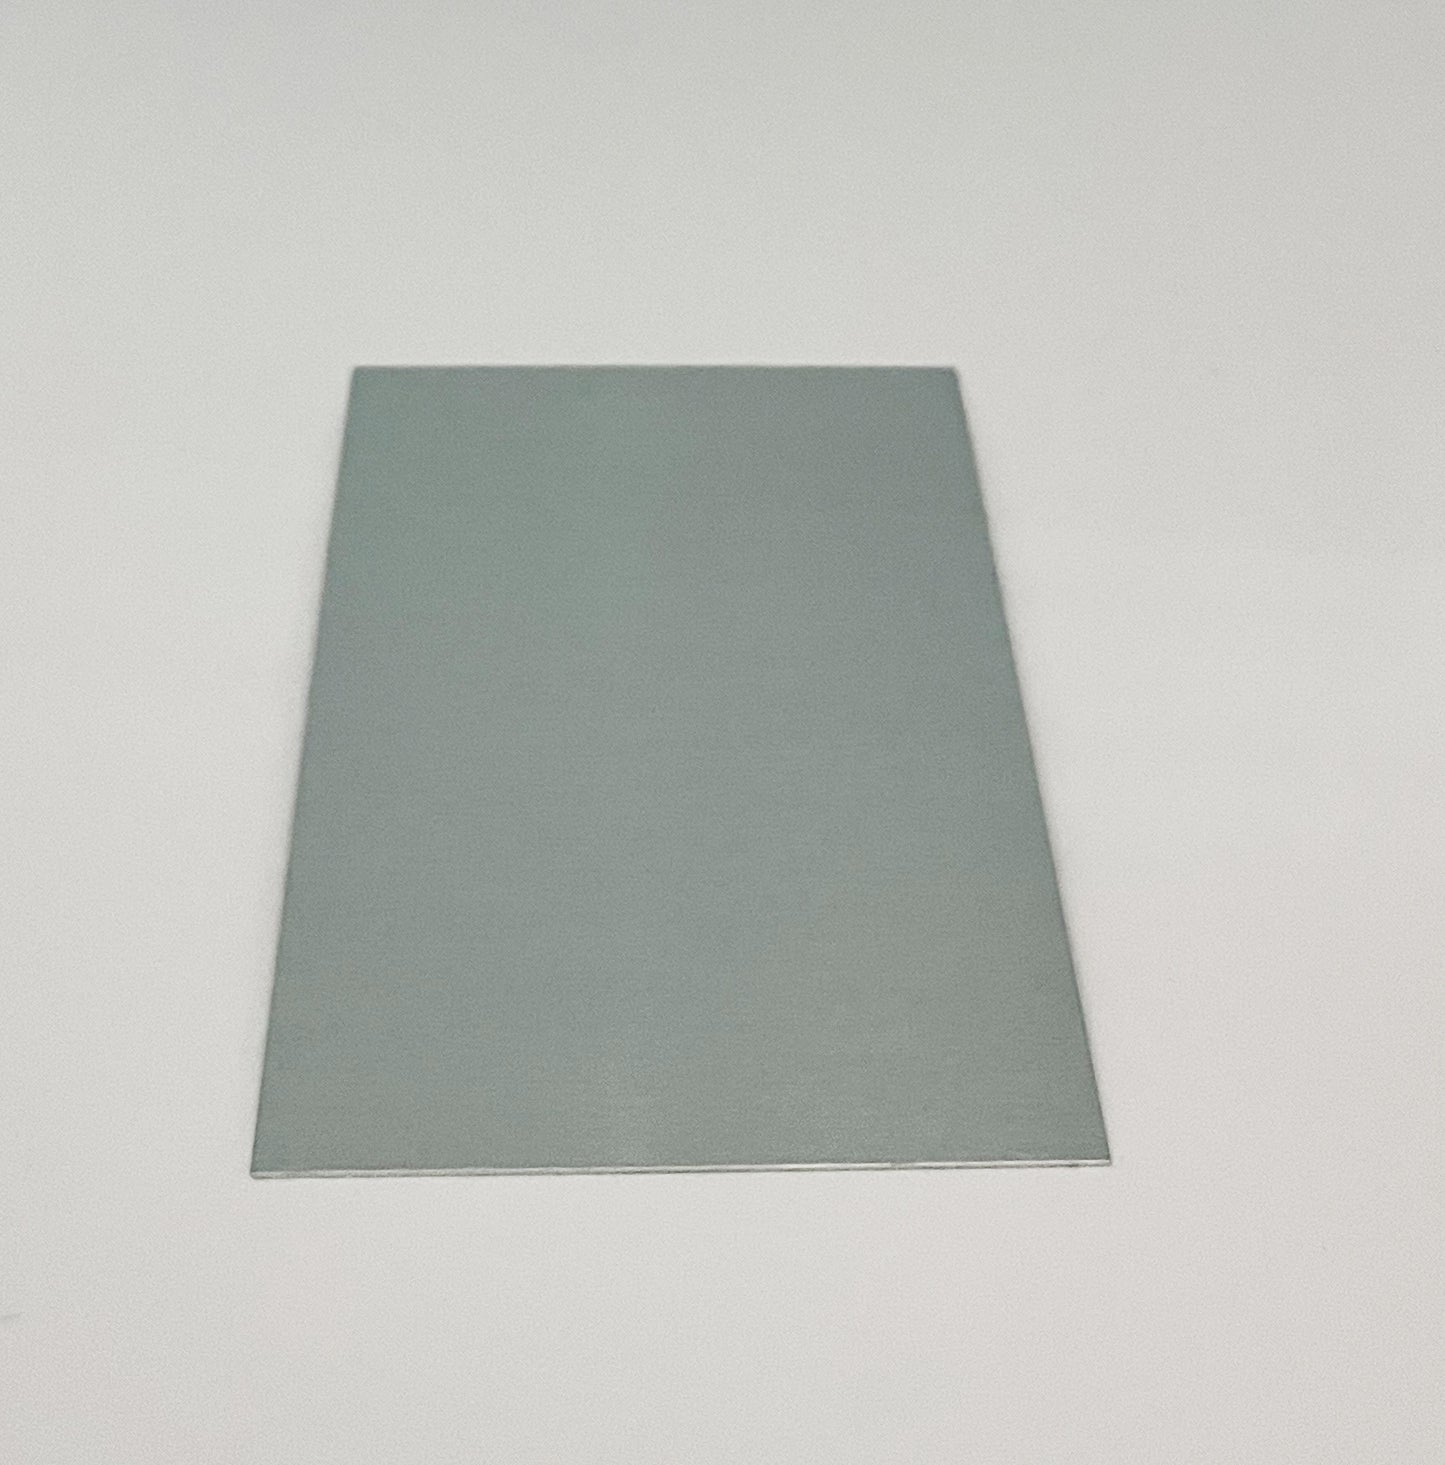 Aluminiumplatte 9 x 6 cm in 3 Farben - Sublishop.net GmbH